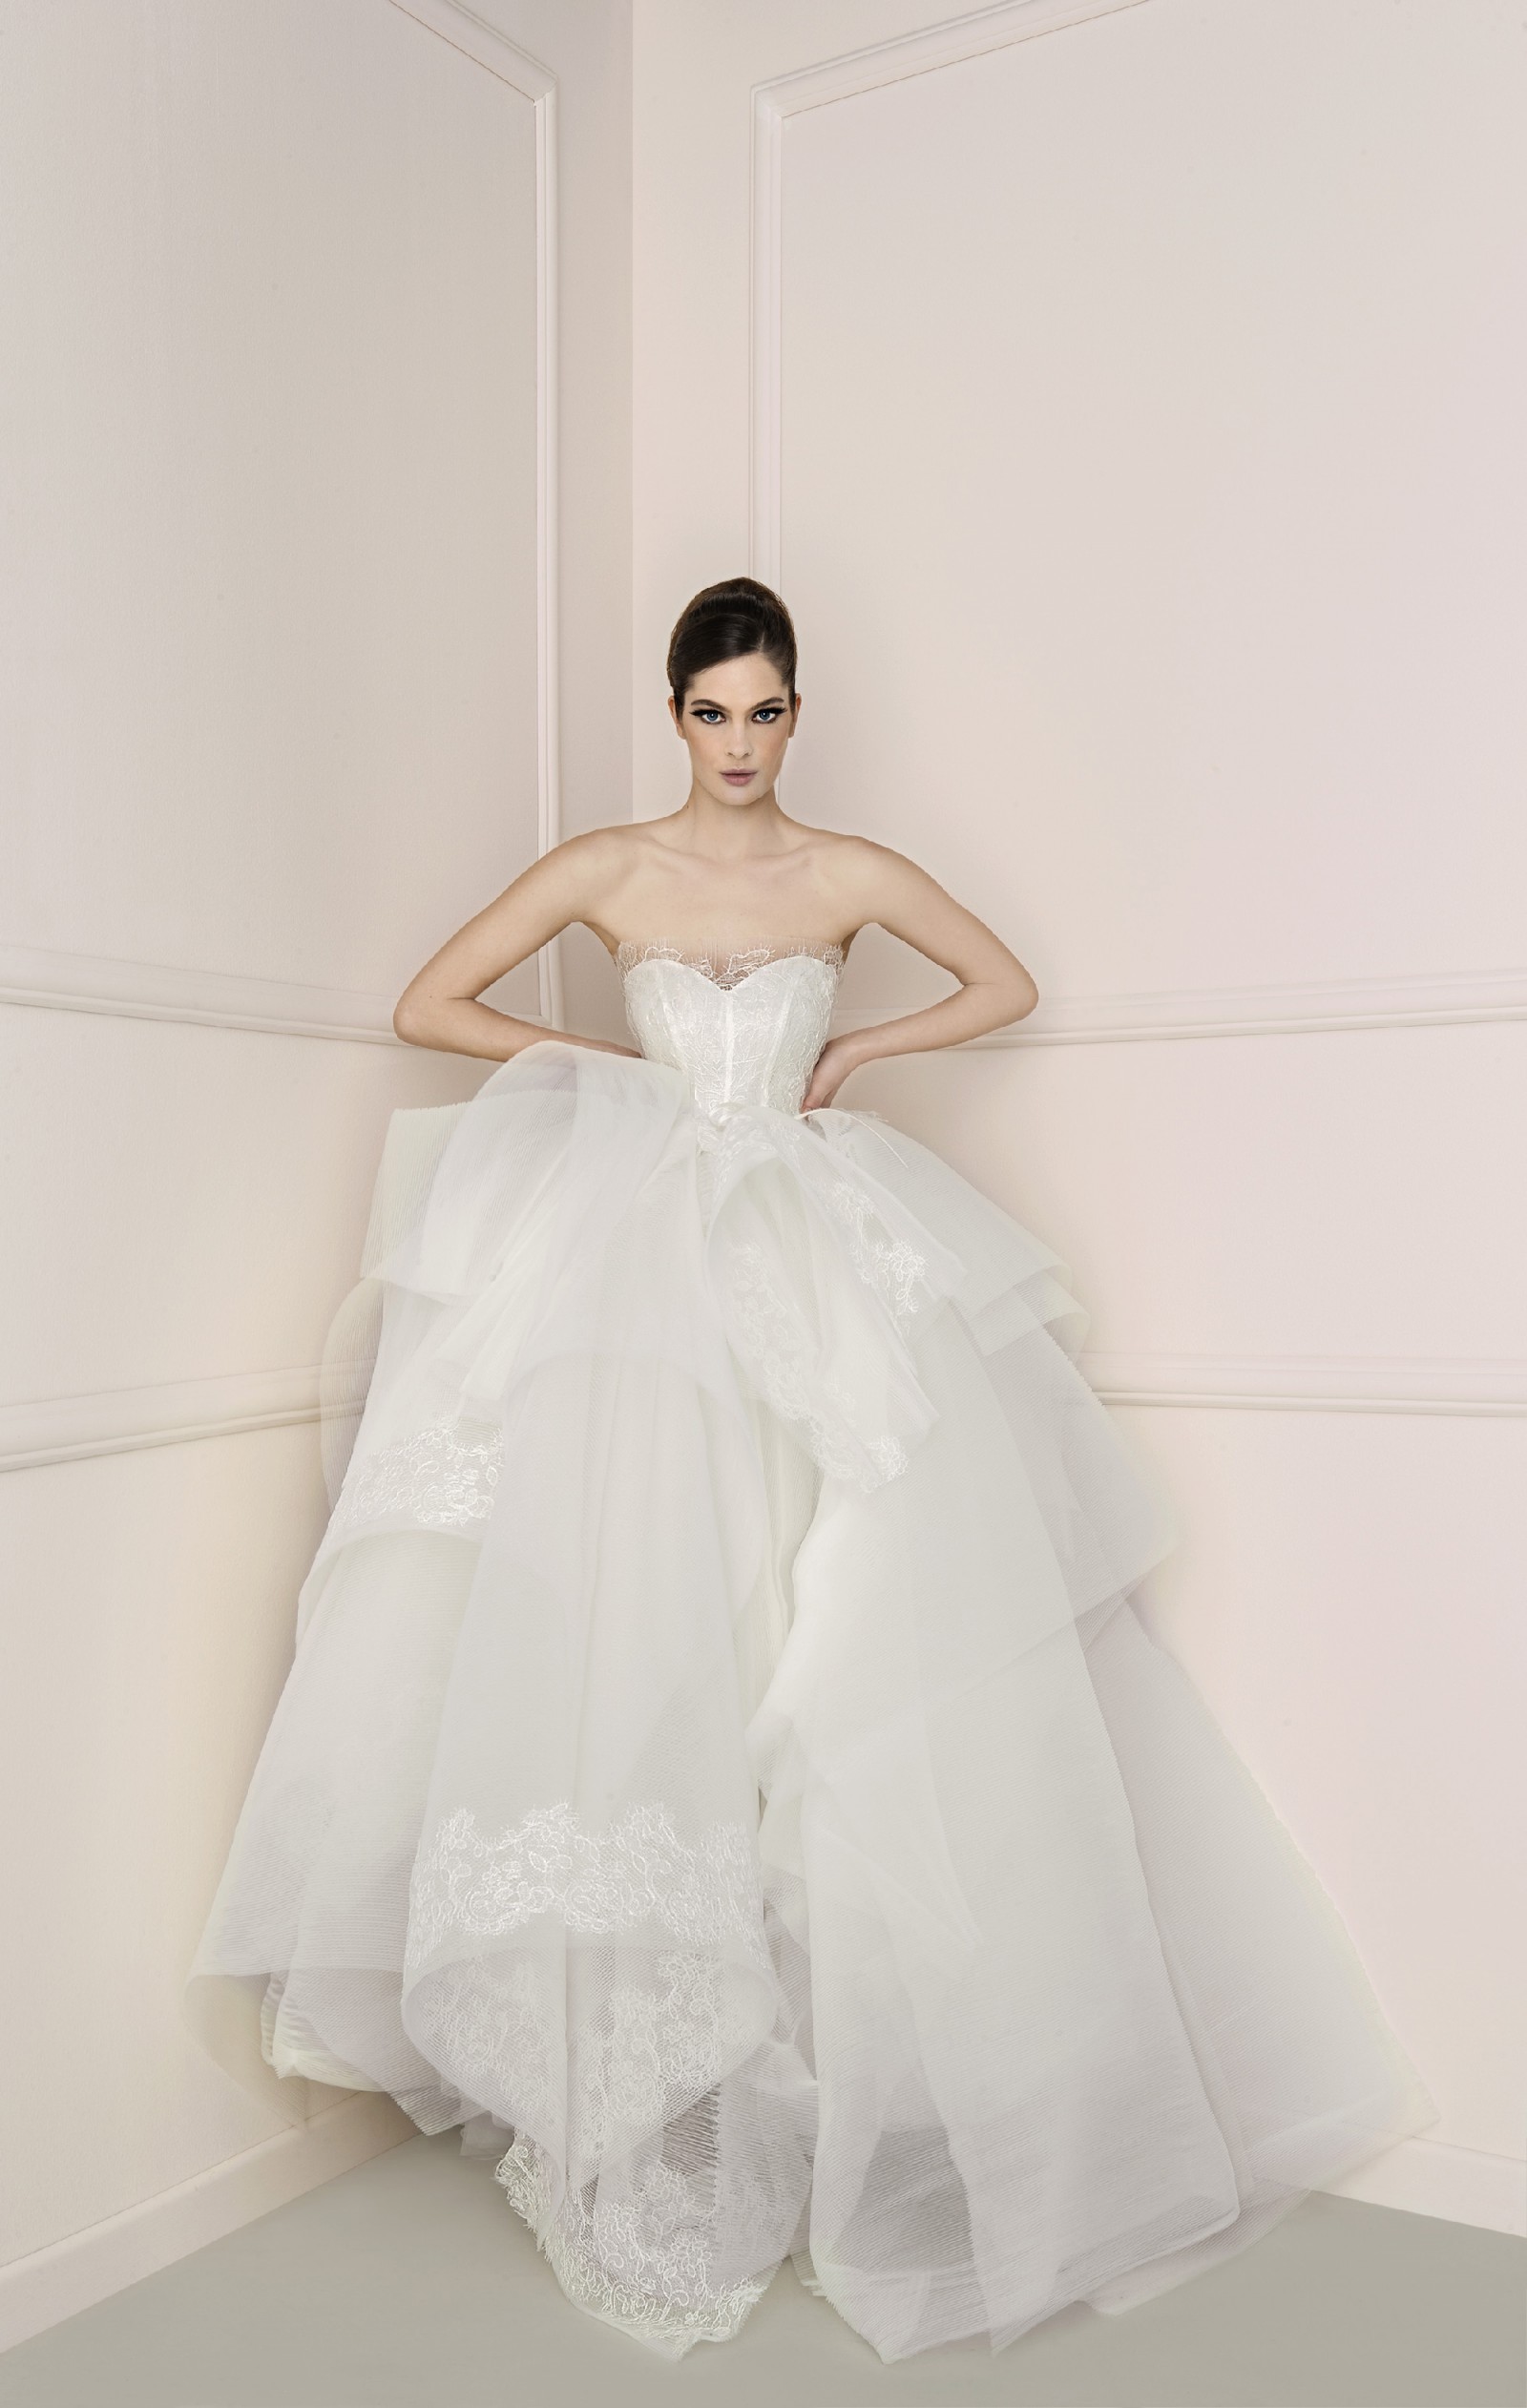 Antonio Riva Minerva New Wedding Dress Save 51% - Stillwhite